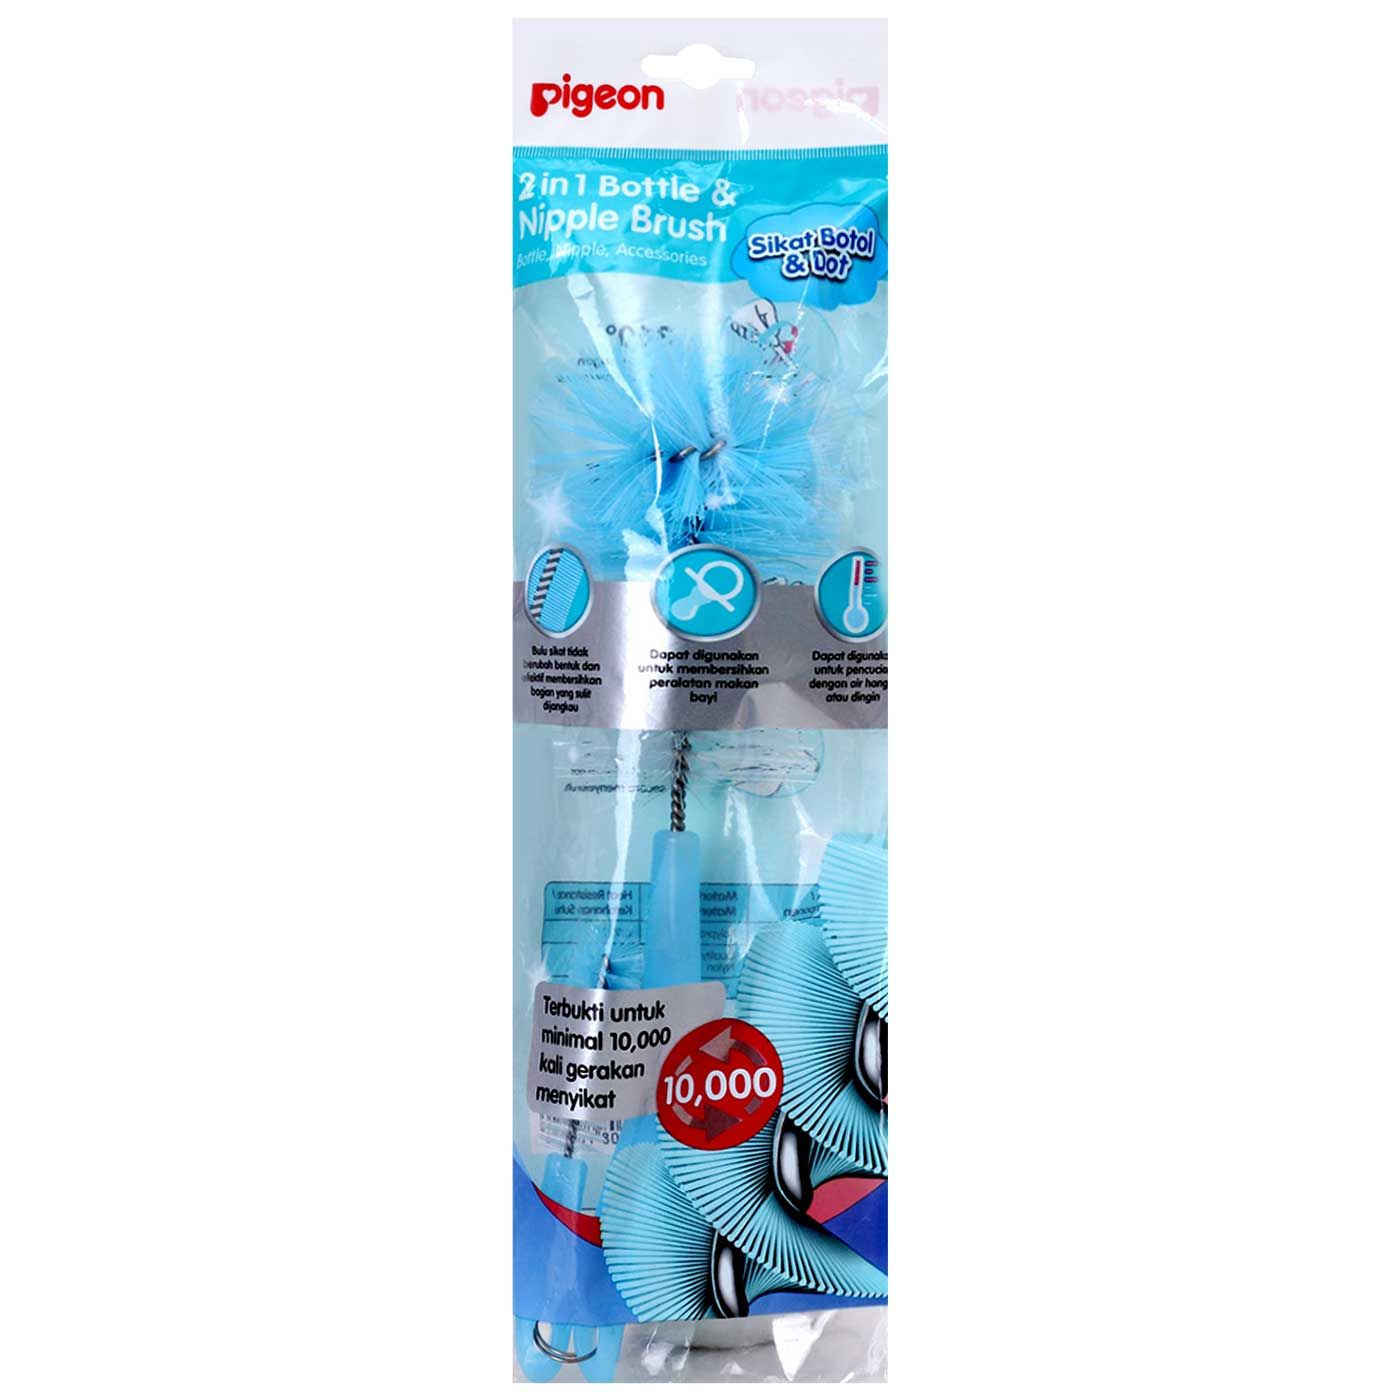 Pigeon 2in1 Bottle & Nipple Brush Basic - 1